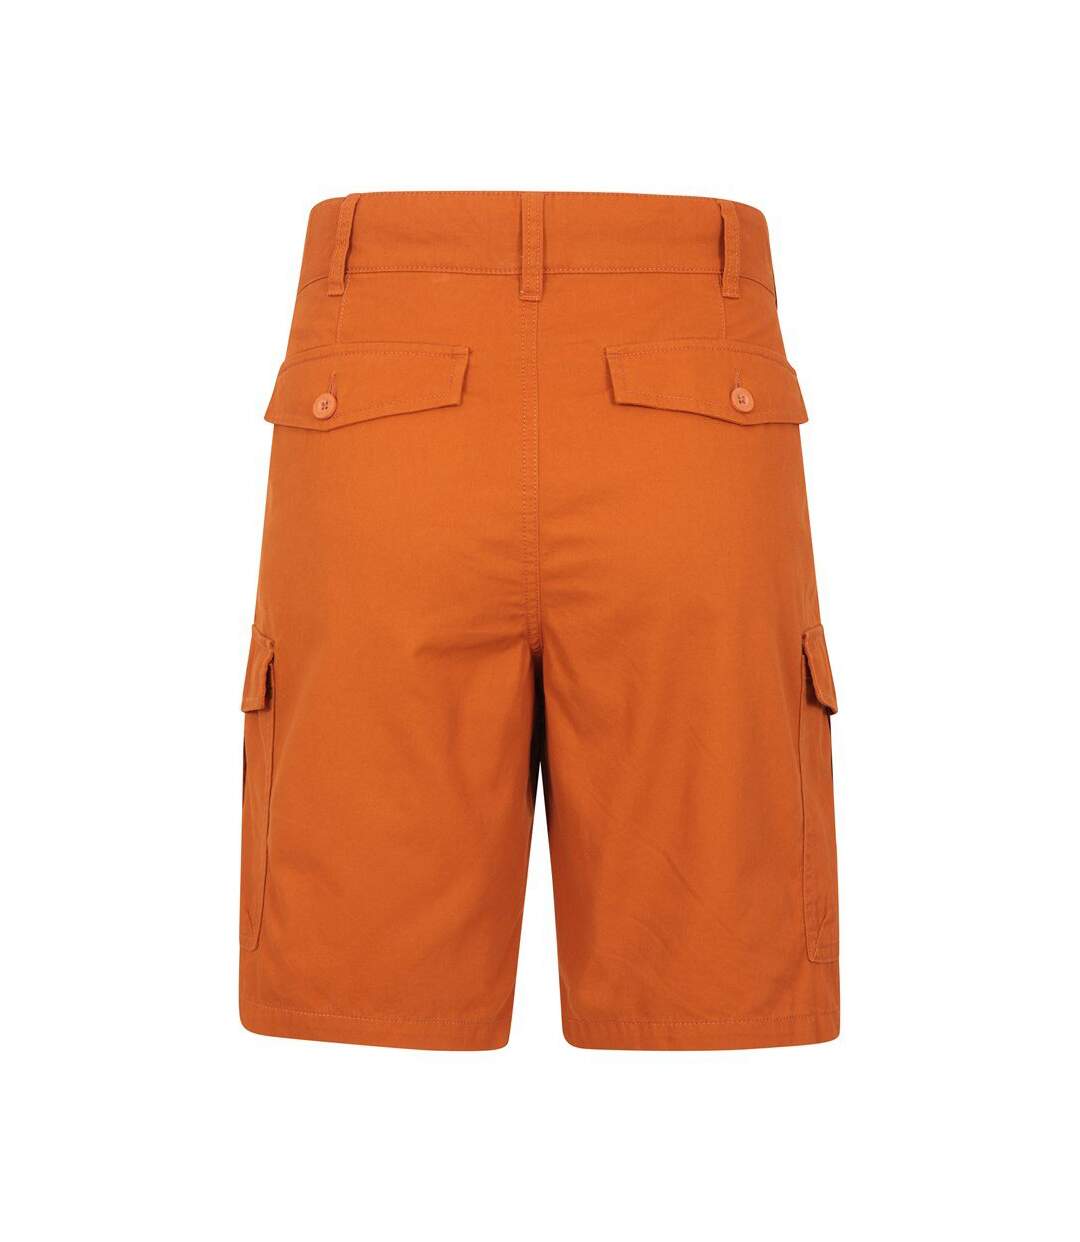 Mountain Warehouse - Short cargo LAKESIDE - Homme (Orange) - UTMW229